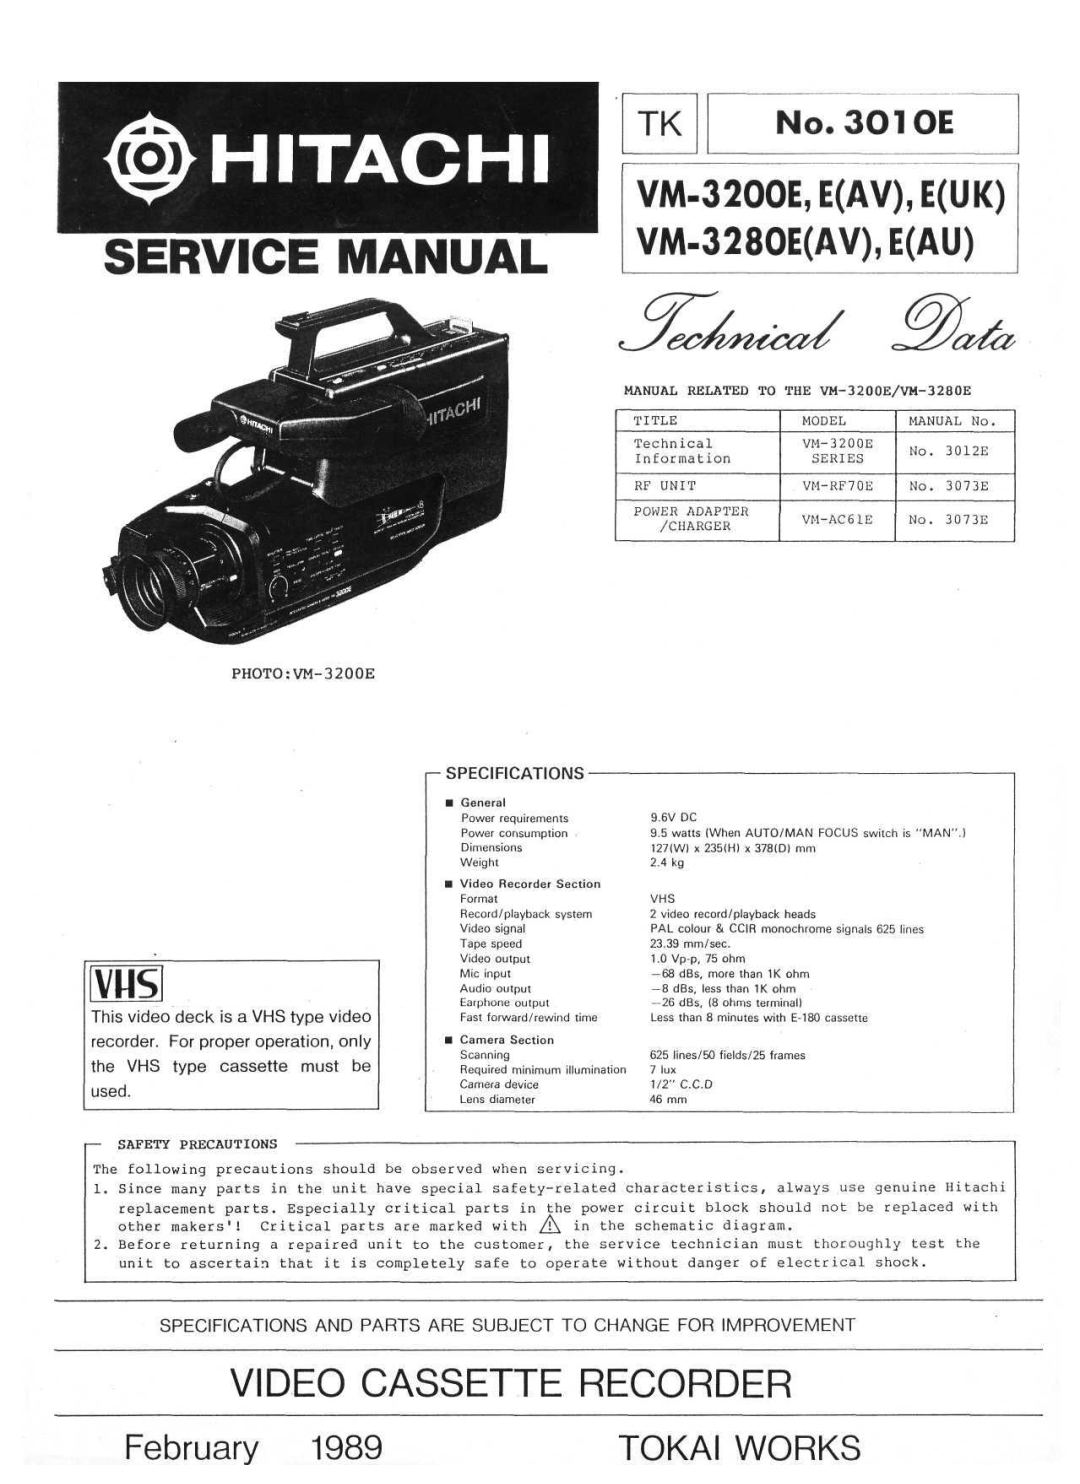 Hitachi 3010E manual 